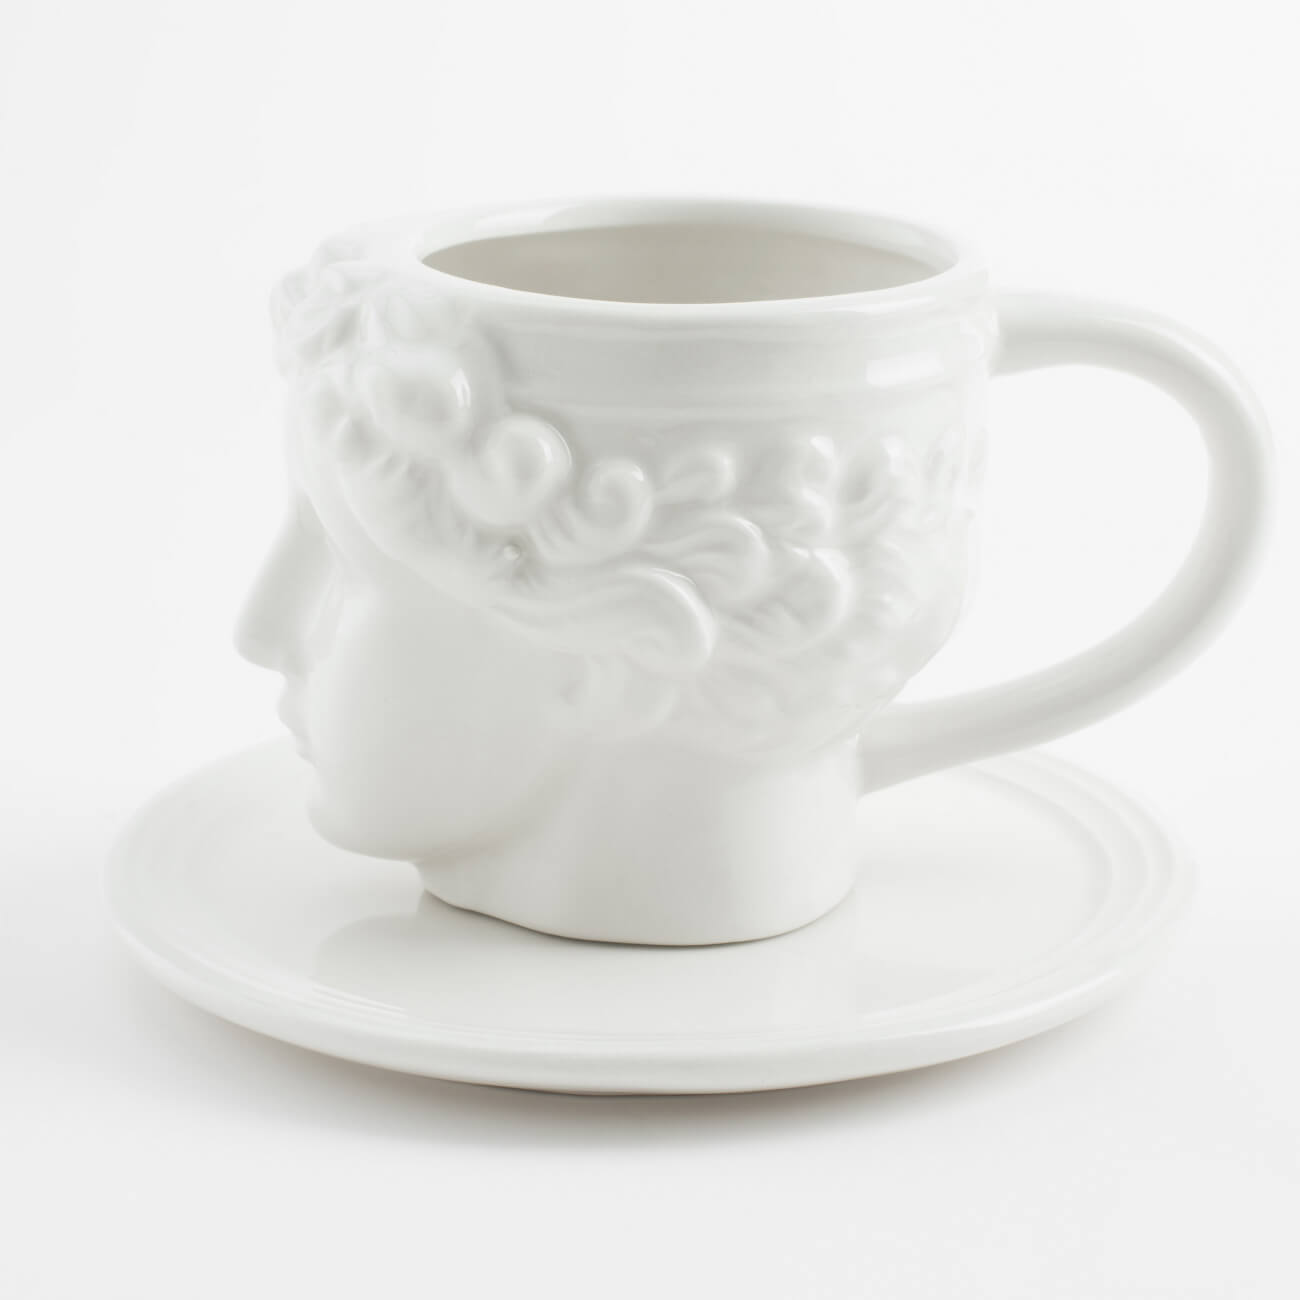 Пара чайная, 1 перс, 2 пр, 230 мл, керамика, молочная, Артемида, Olympus чайная пара семикаракорская керамика гостеприимная